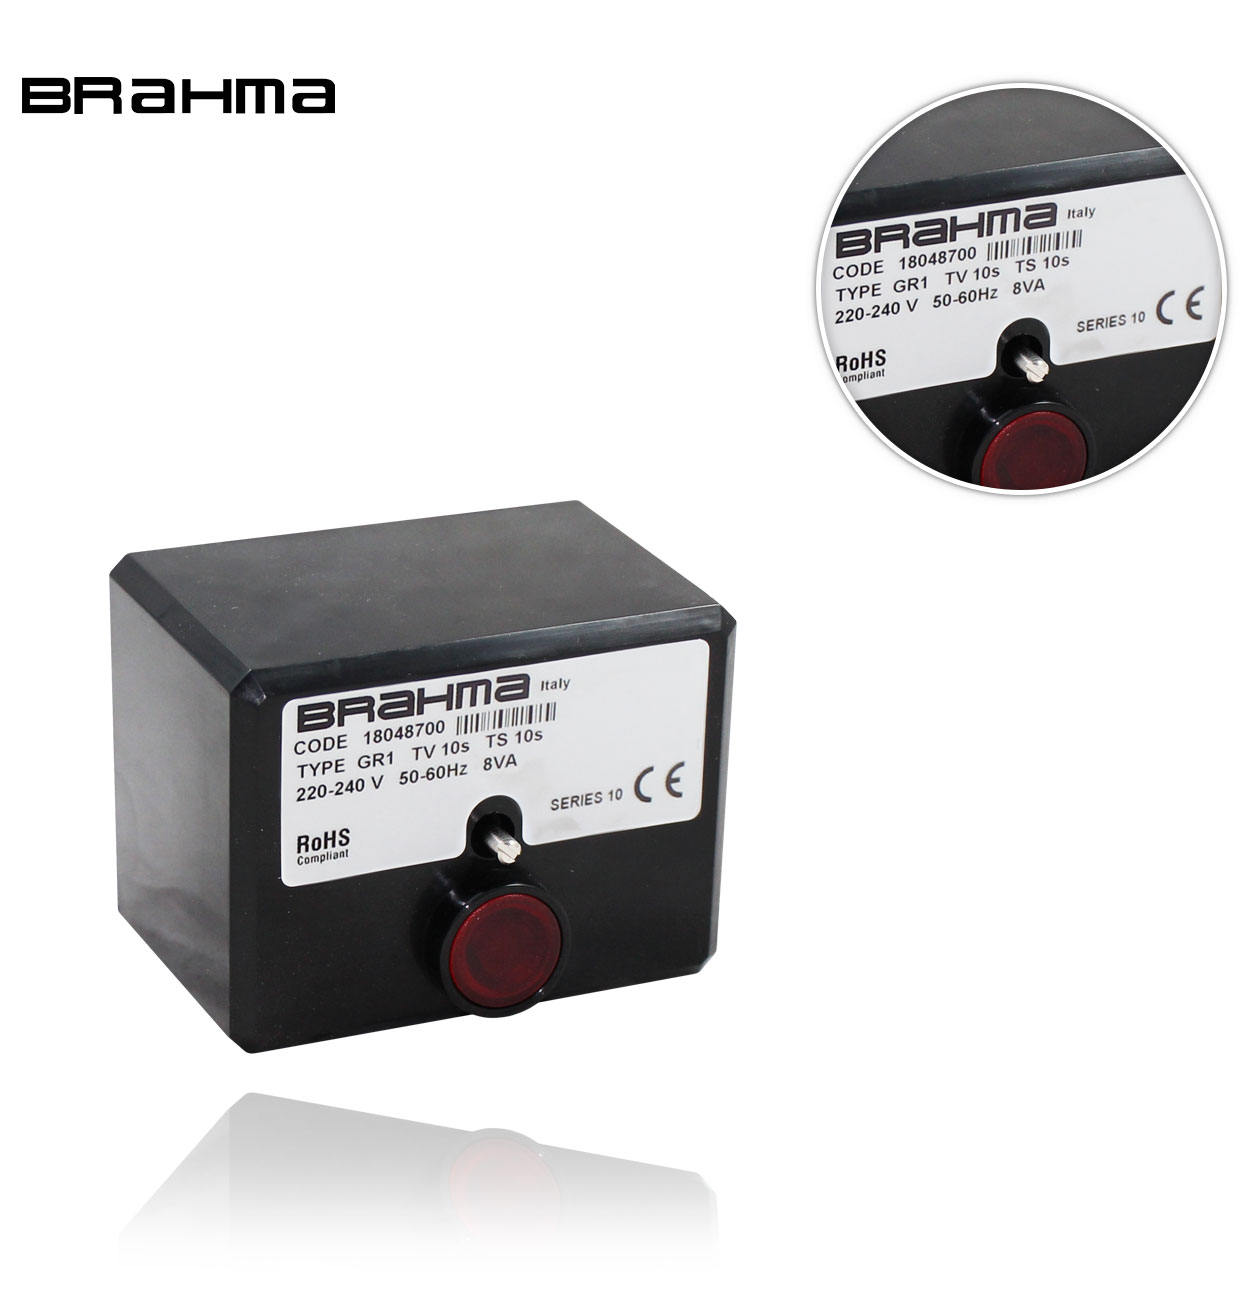 GR1 S10 TV10 TS10  (FR1)    BRAHMA CONTROL BOX